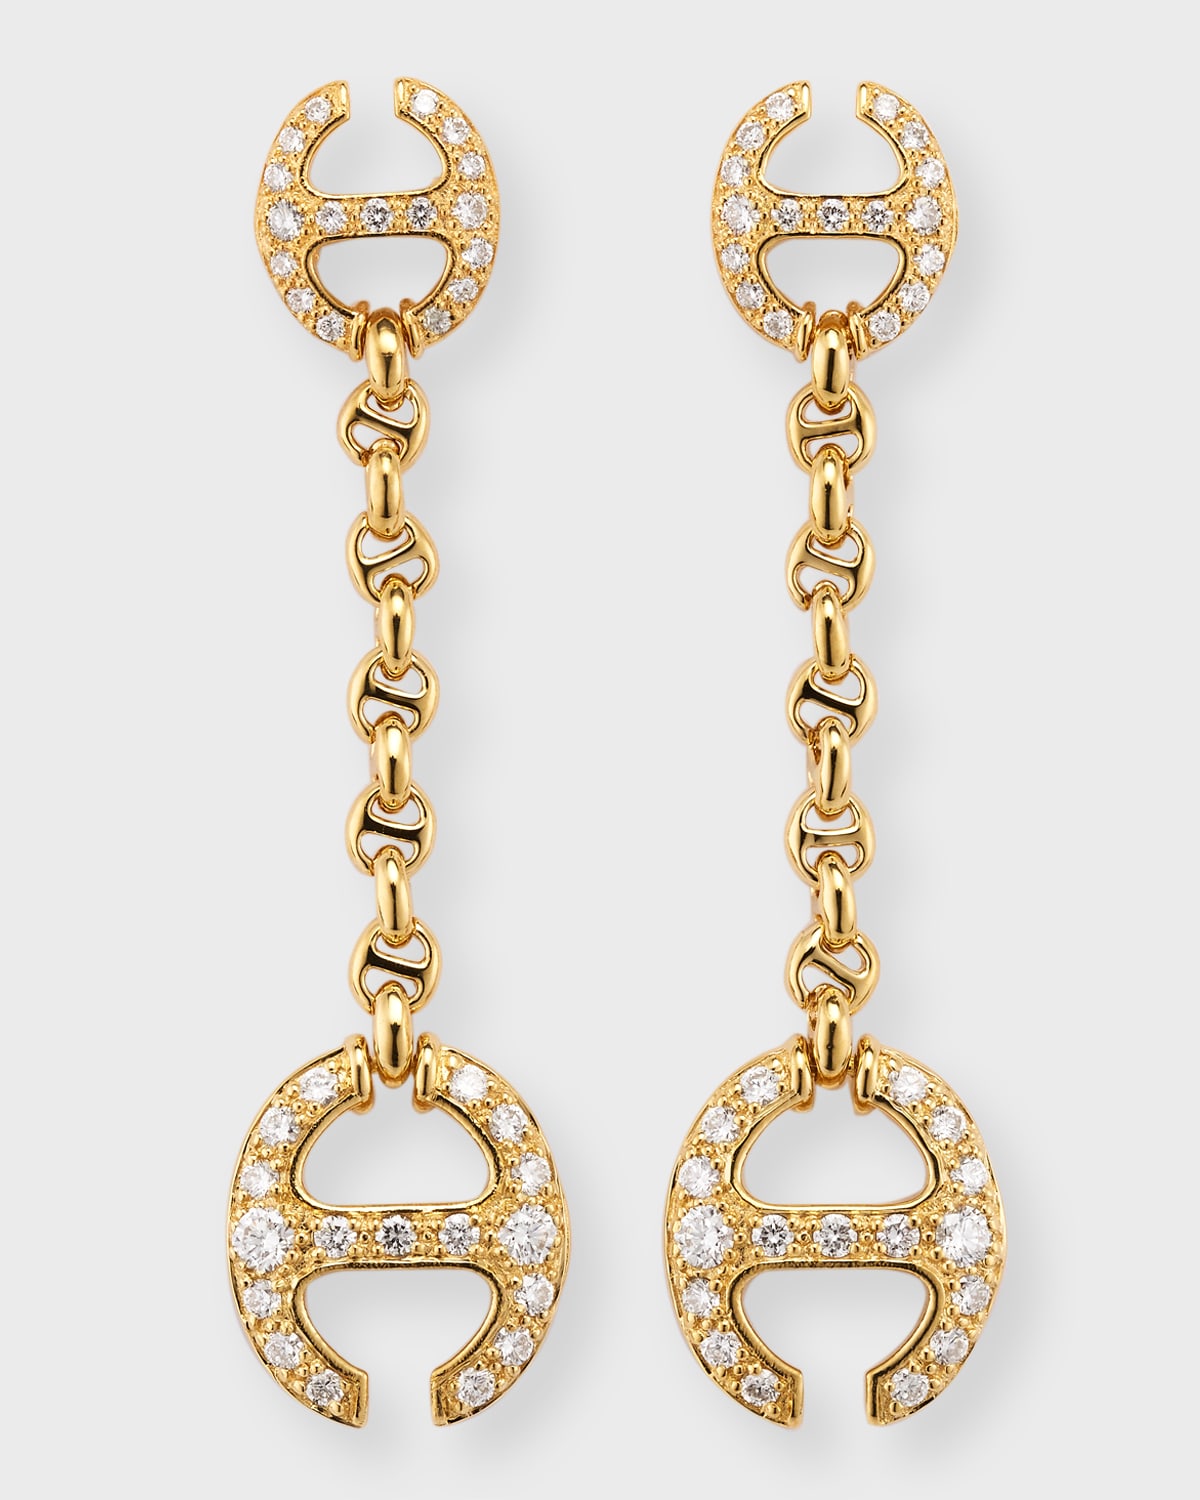 18K Yellow Gold Micro Link Chain Earrings with Diamonds